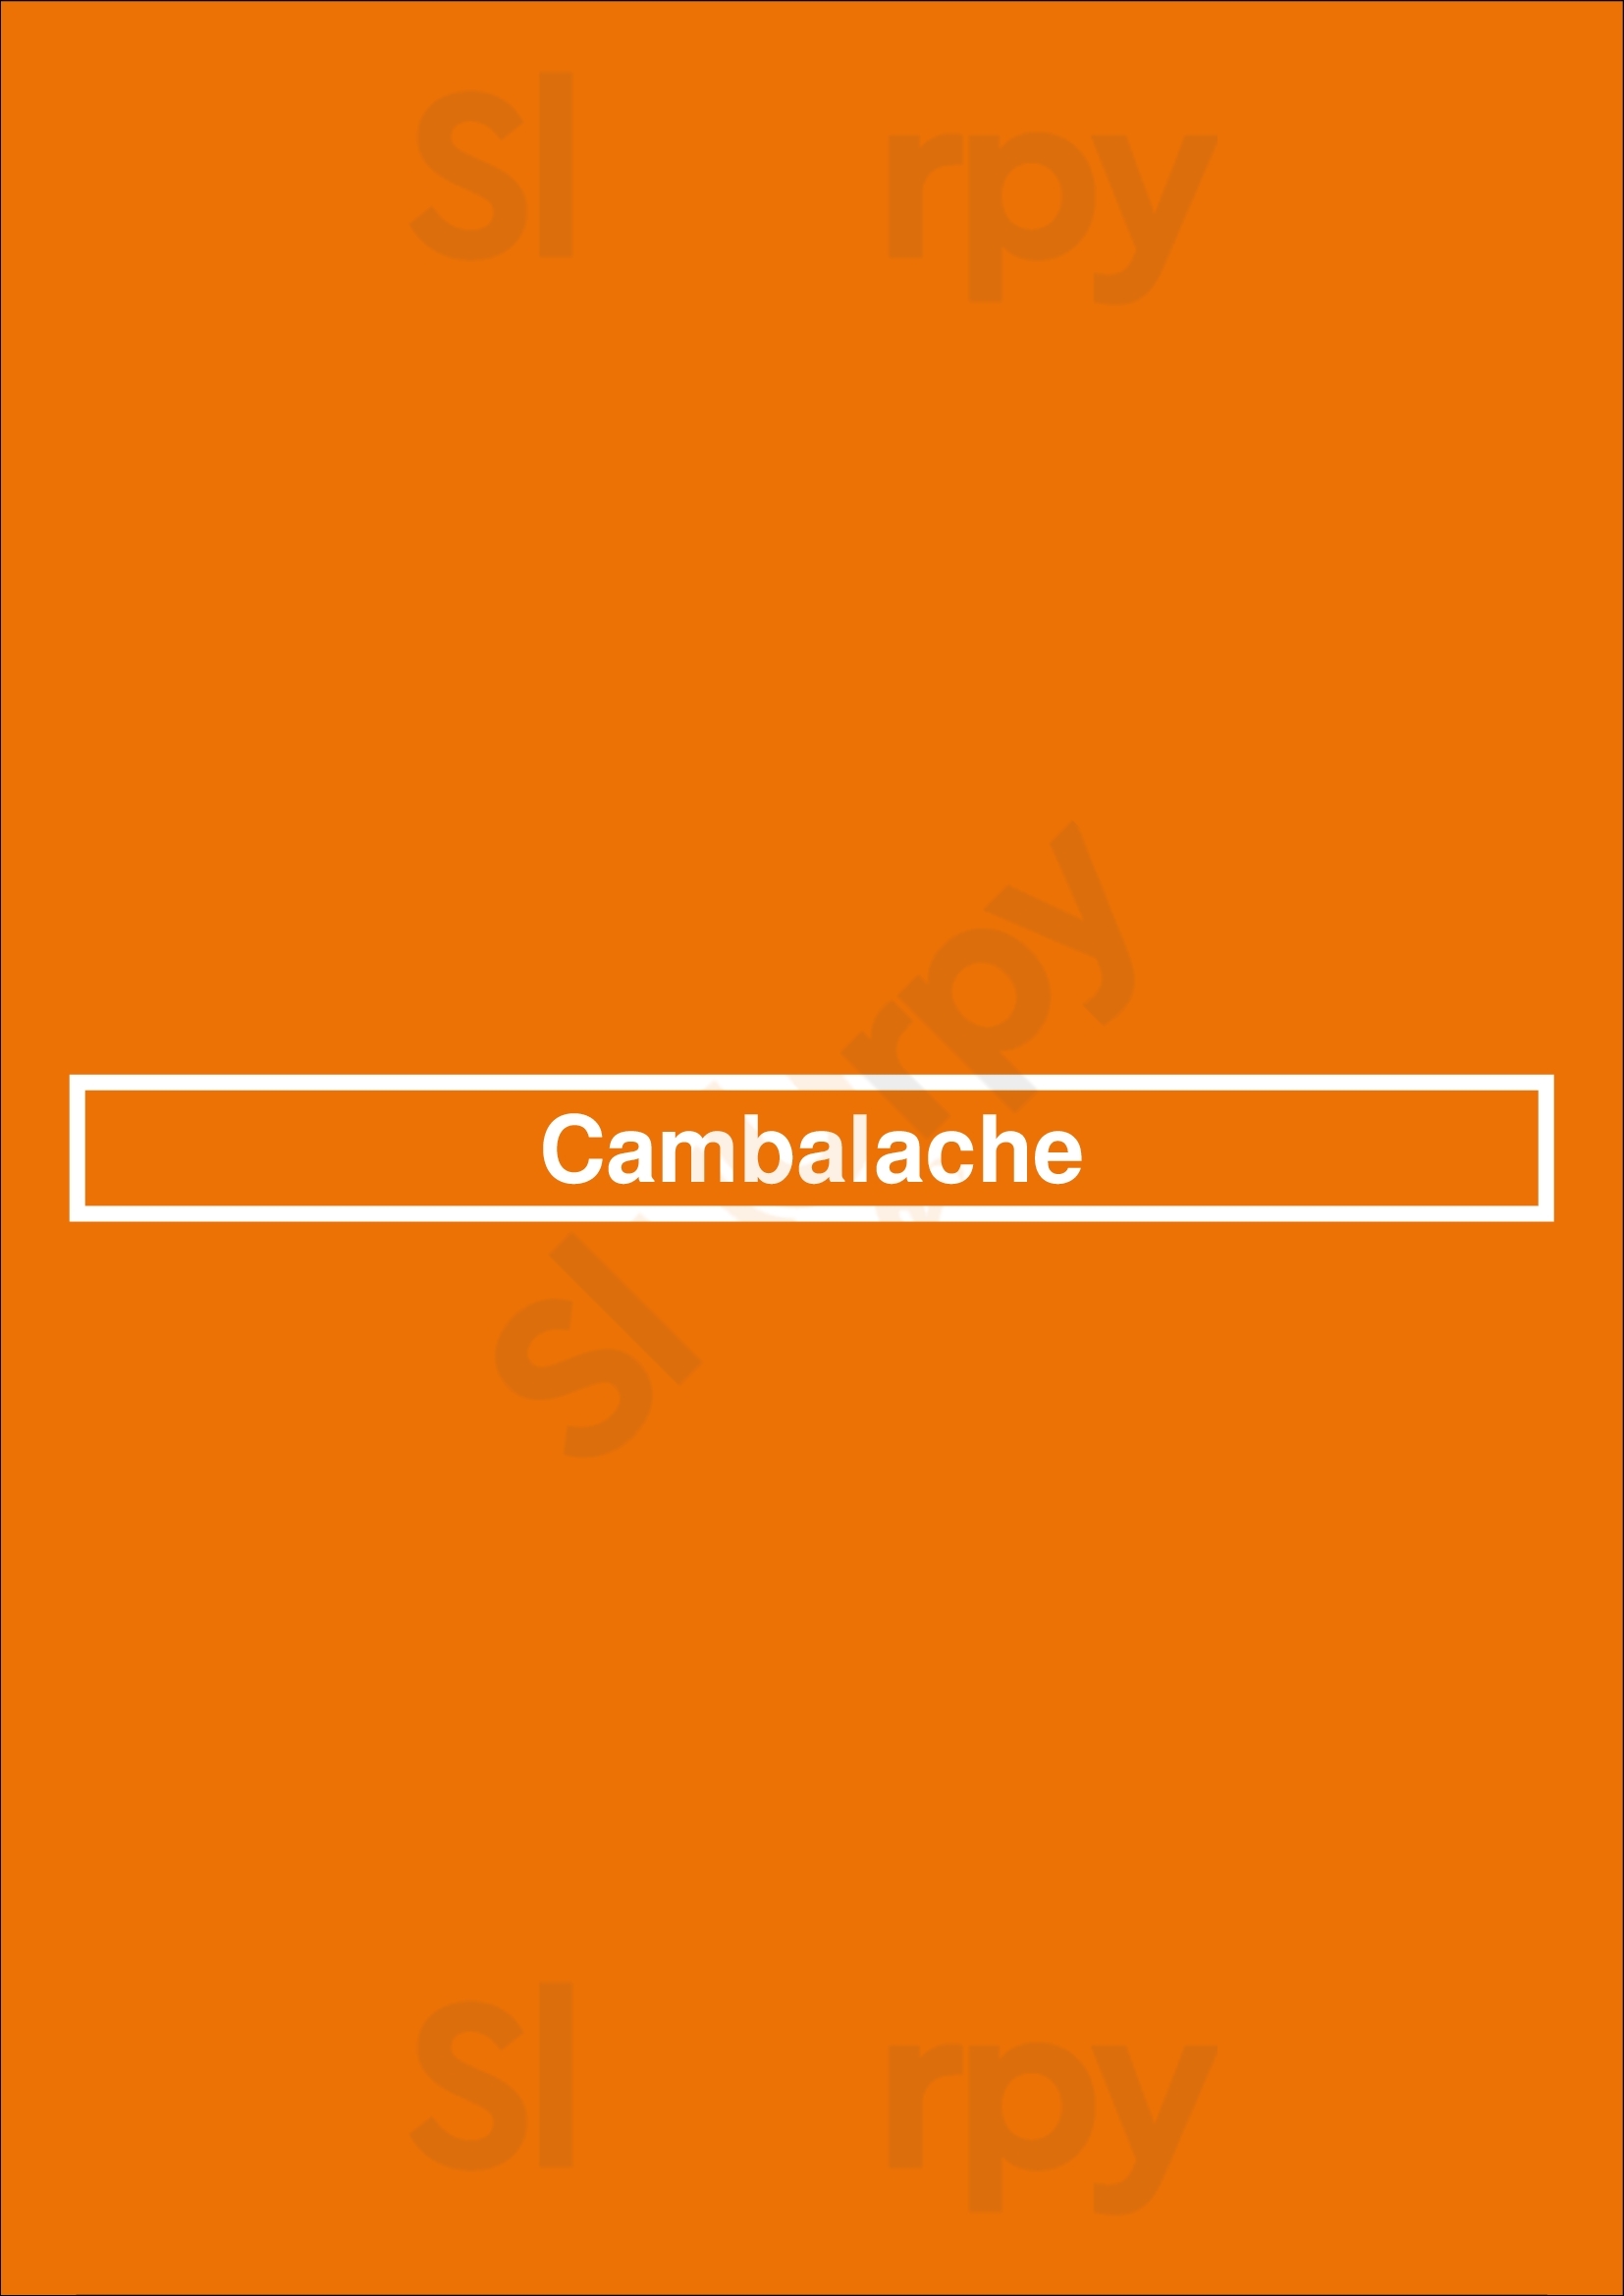 Cambalache Buenos Aires Menu - 1